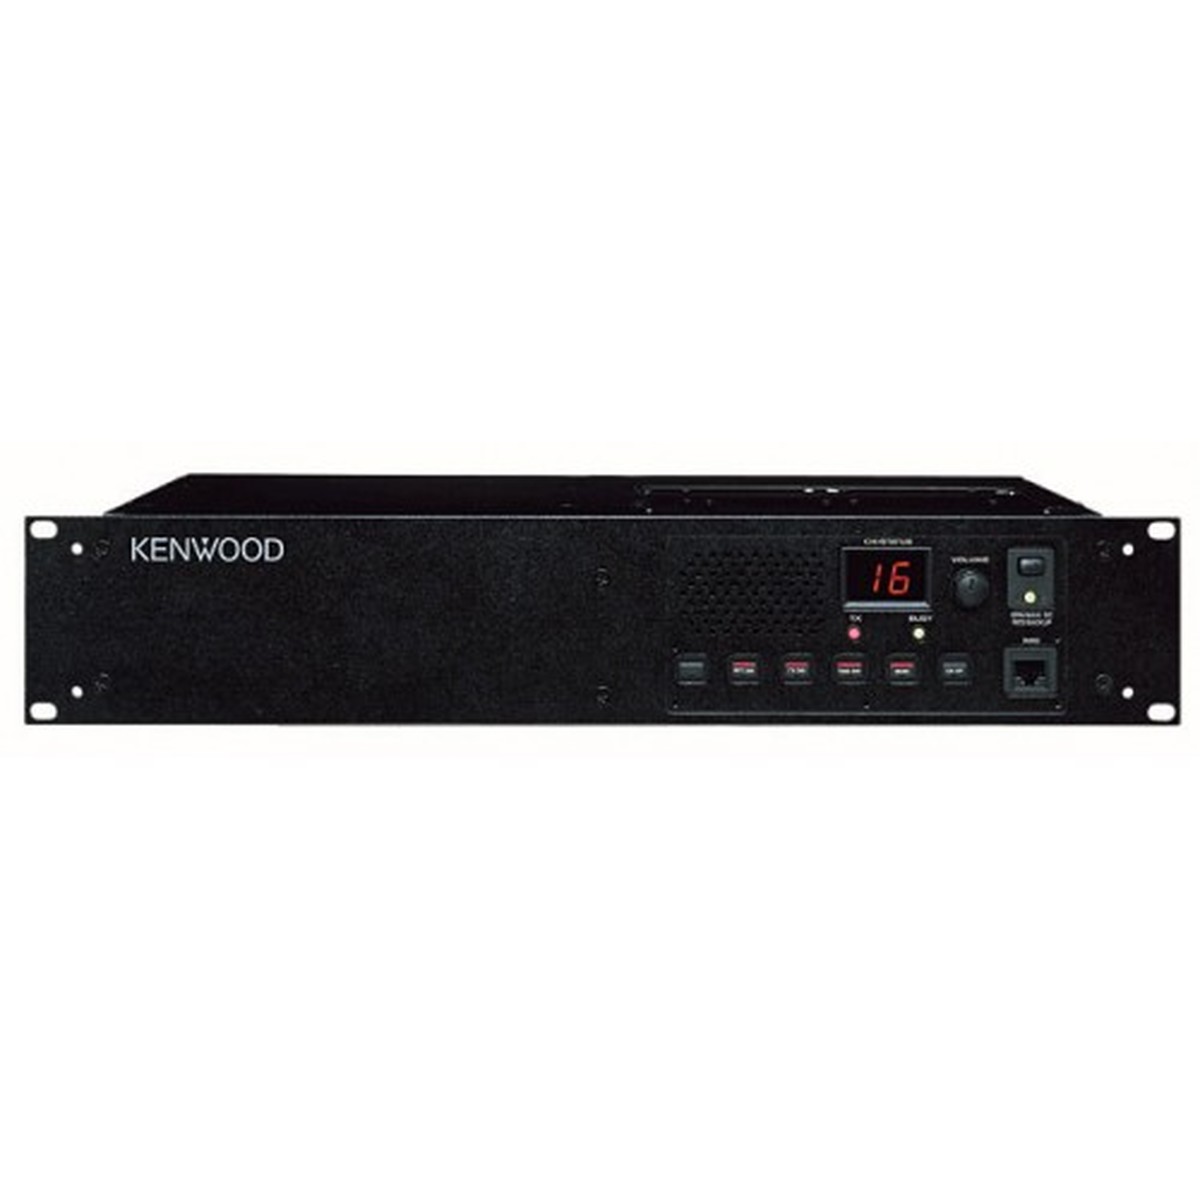 Repetidora Kenwood TKR-750K Analogica VHF 146-174 MHz